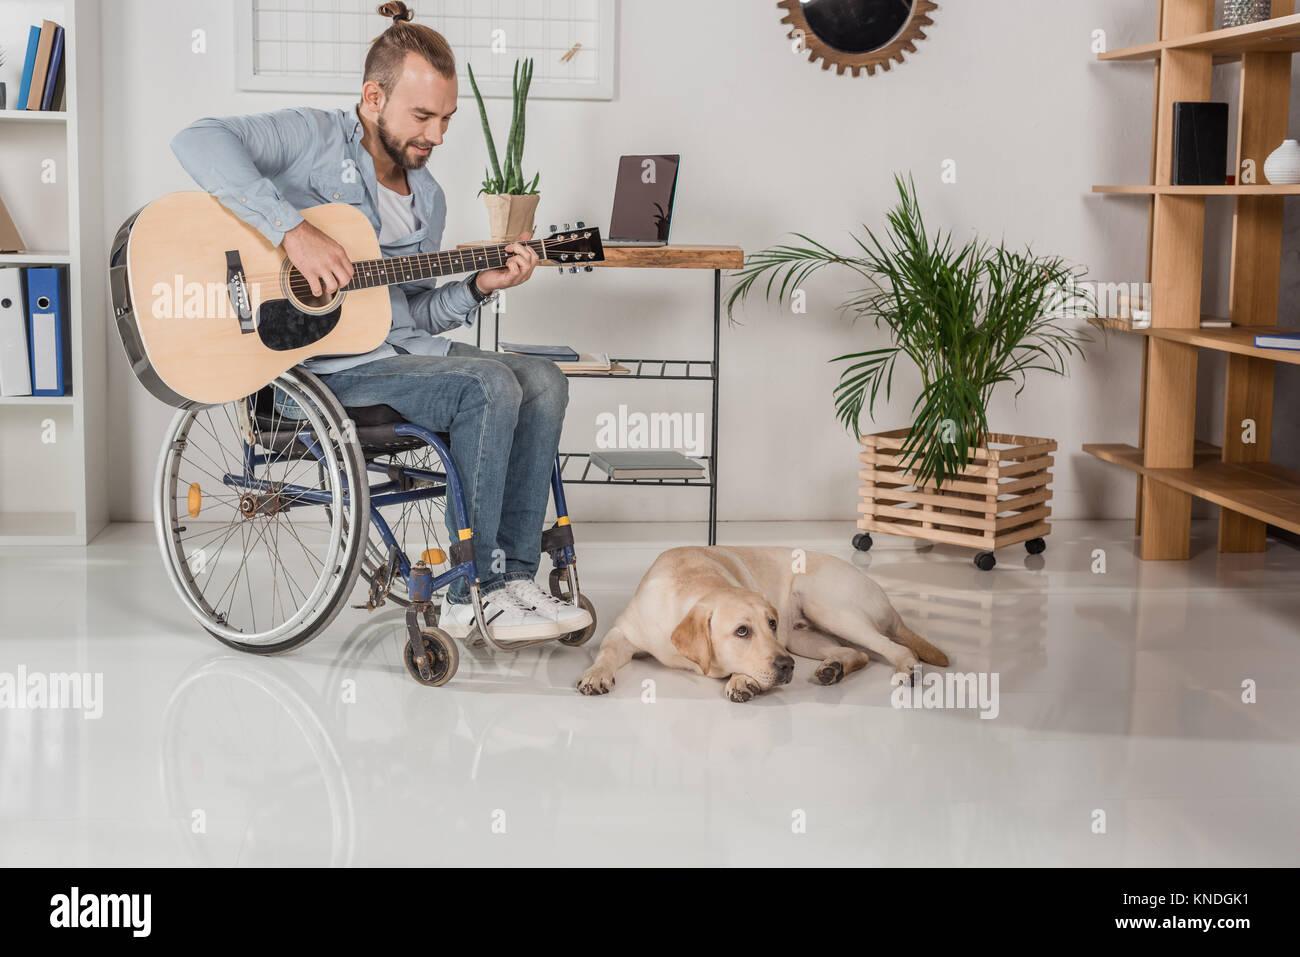 man on wheelchair playing guitar Stock Photo